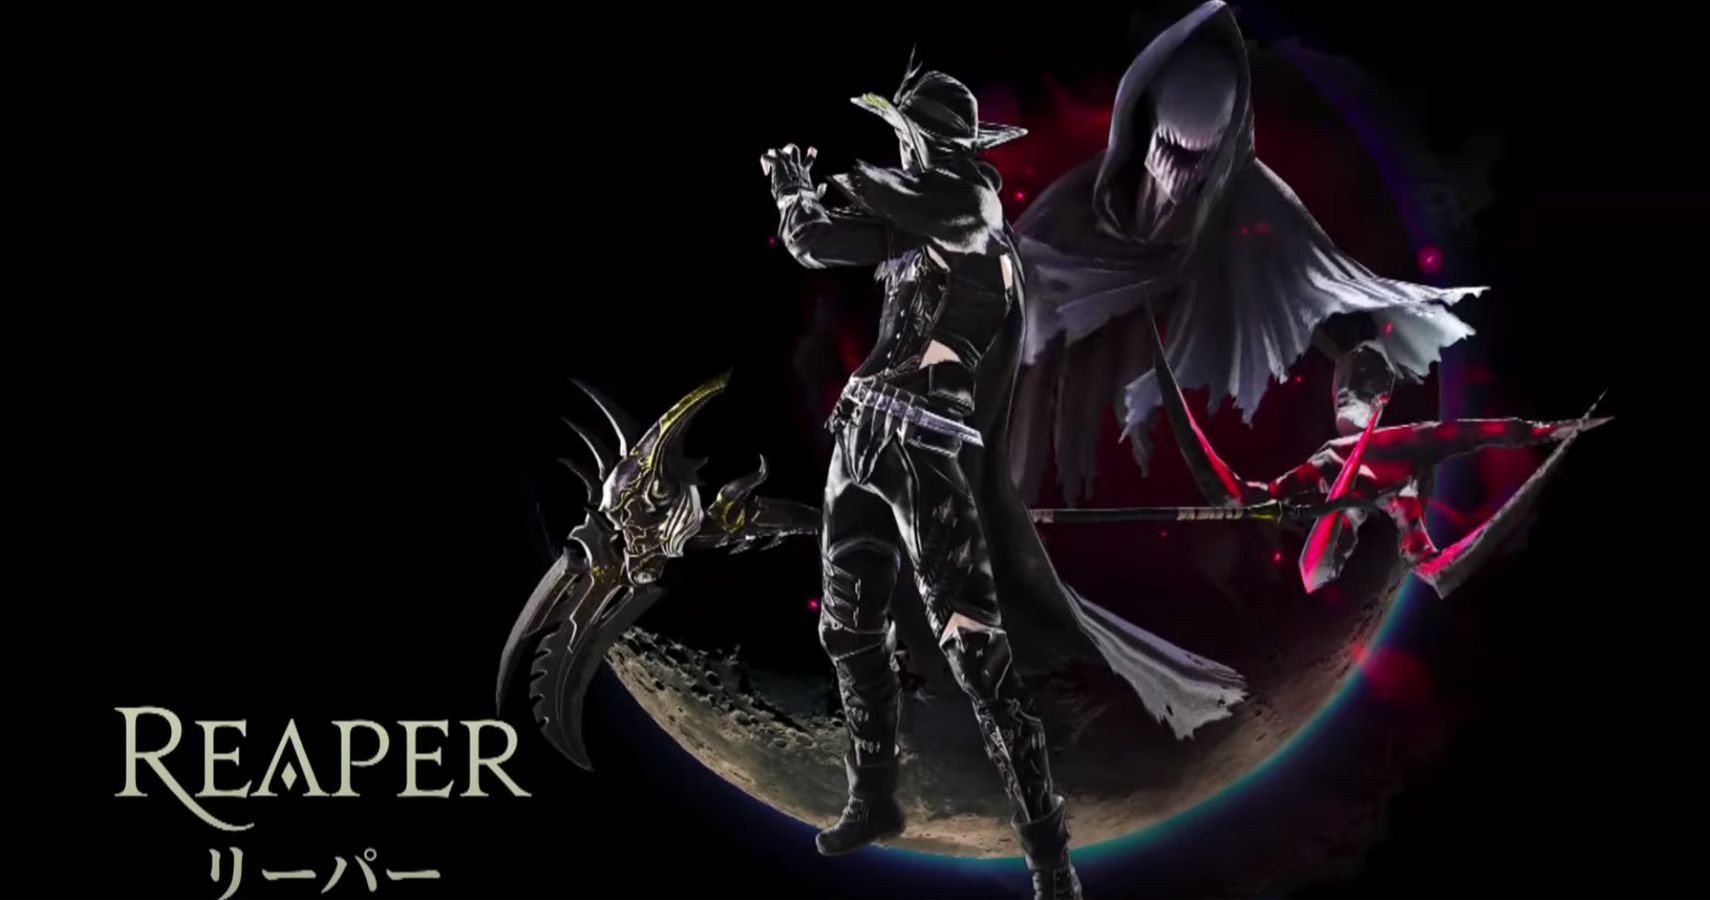 Final Fantasy 14's Reaper Job Class Debut